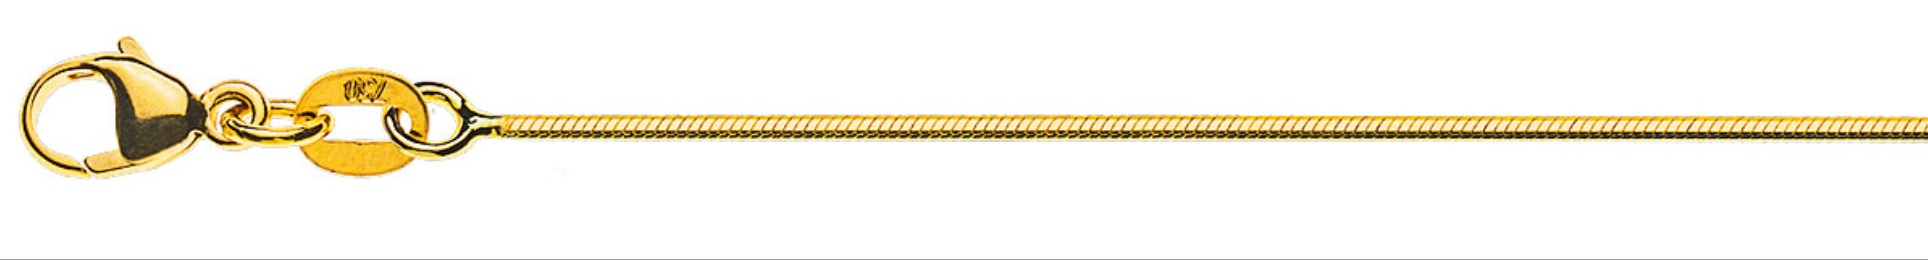 AURONOS Prestige Necklace yellow gold 18K snake chain diamond 38cm 1.0mm